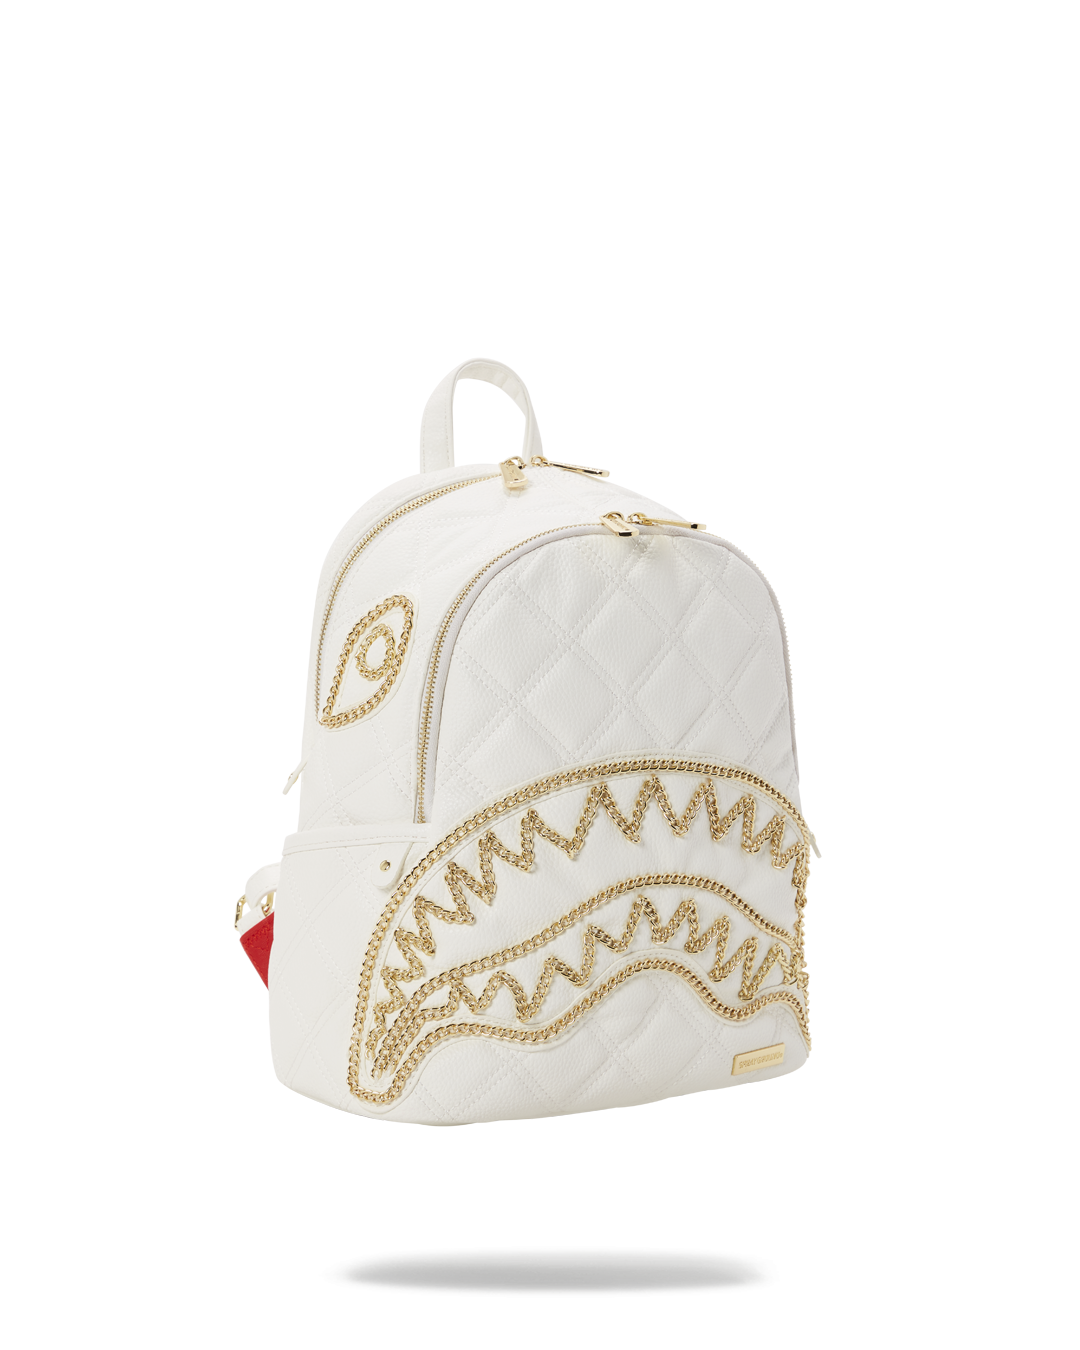 Sprayground Backpack Riviera White Gold DLX Shark Chain Books Laptop Bag NEW